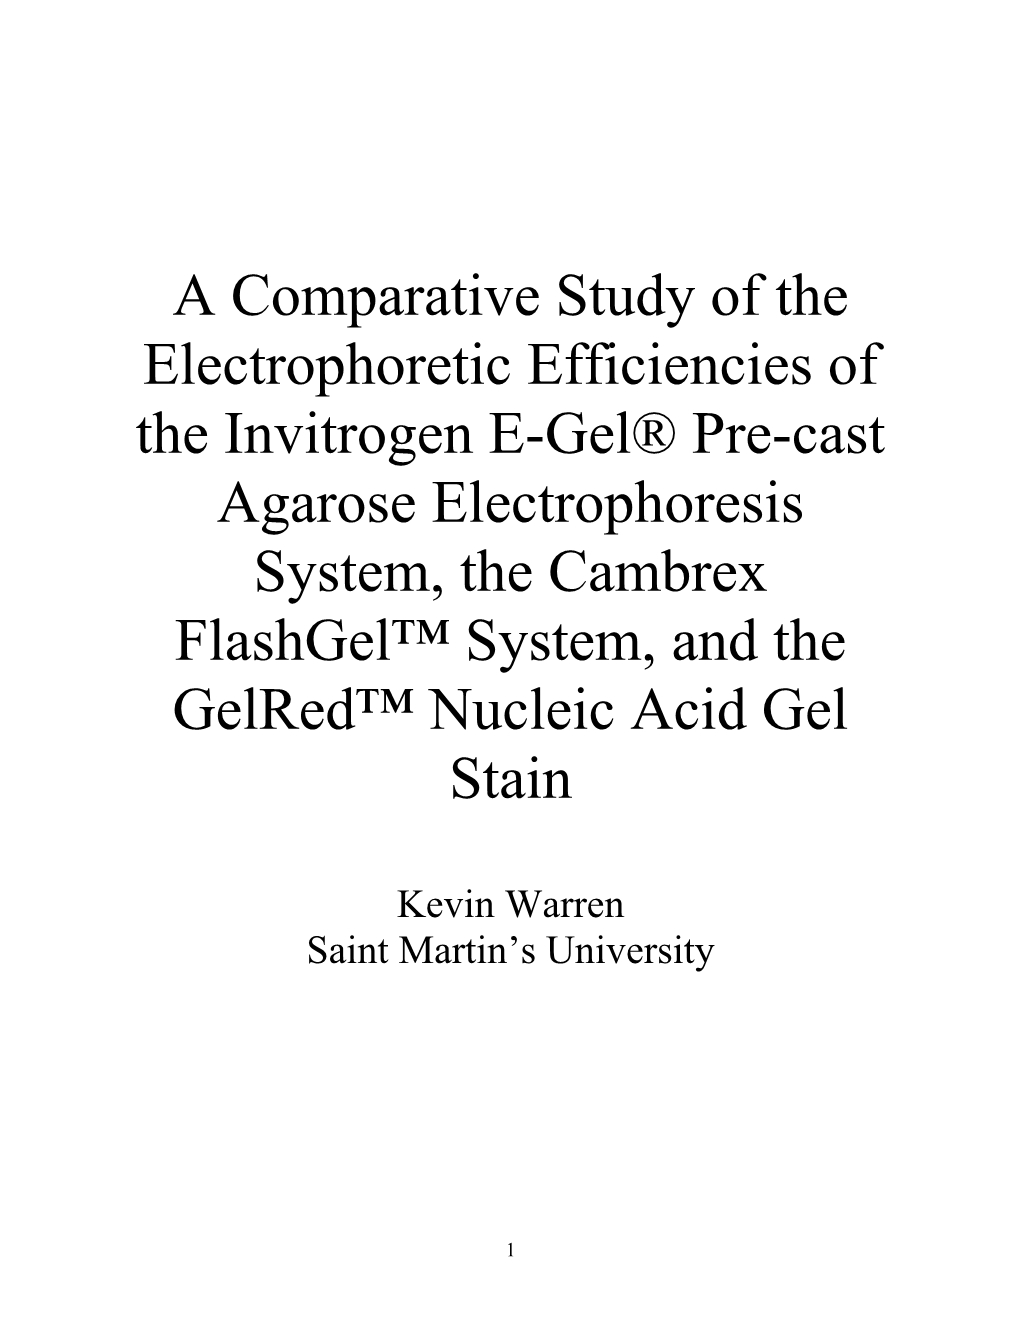 A Comparative Study of the Electrophoretic Efficiencies of the Invitrogen E-Gel Pre-Cast